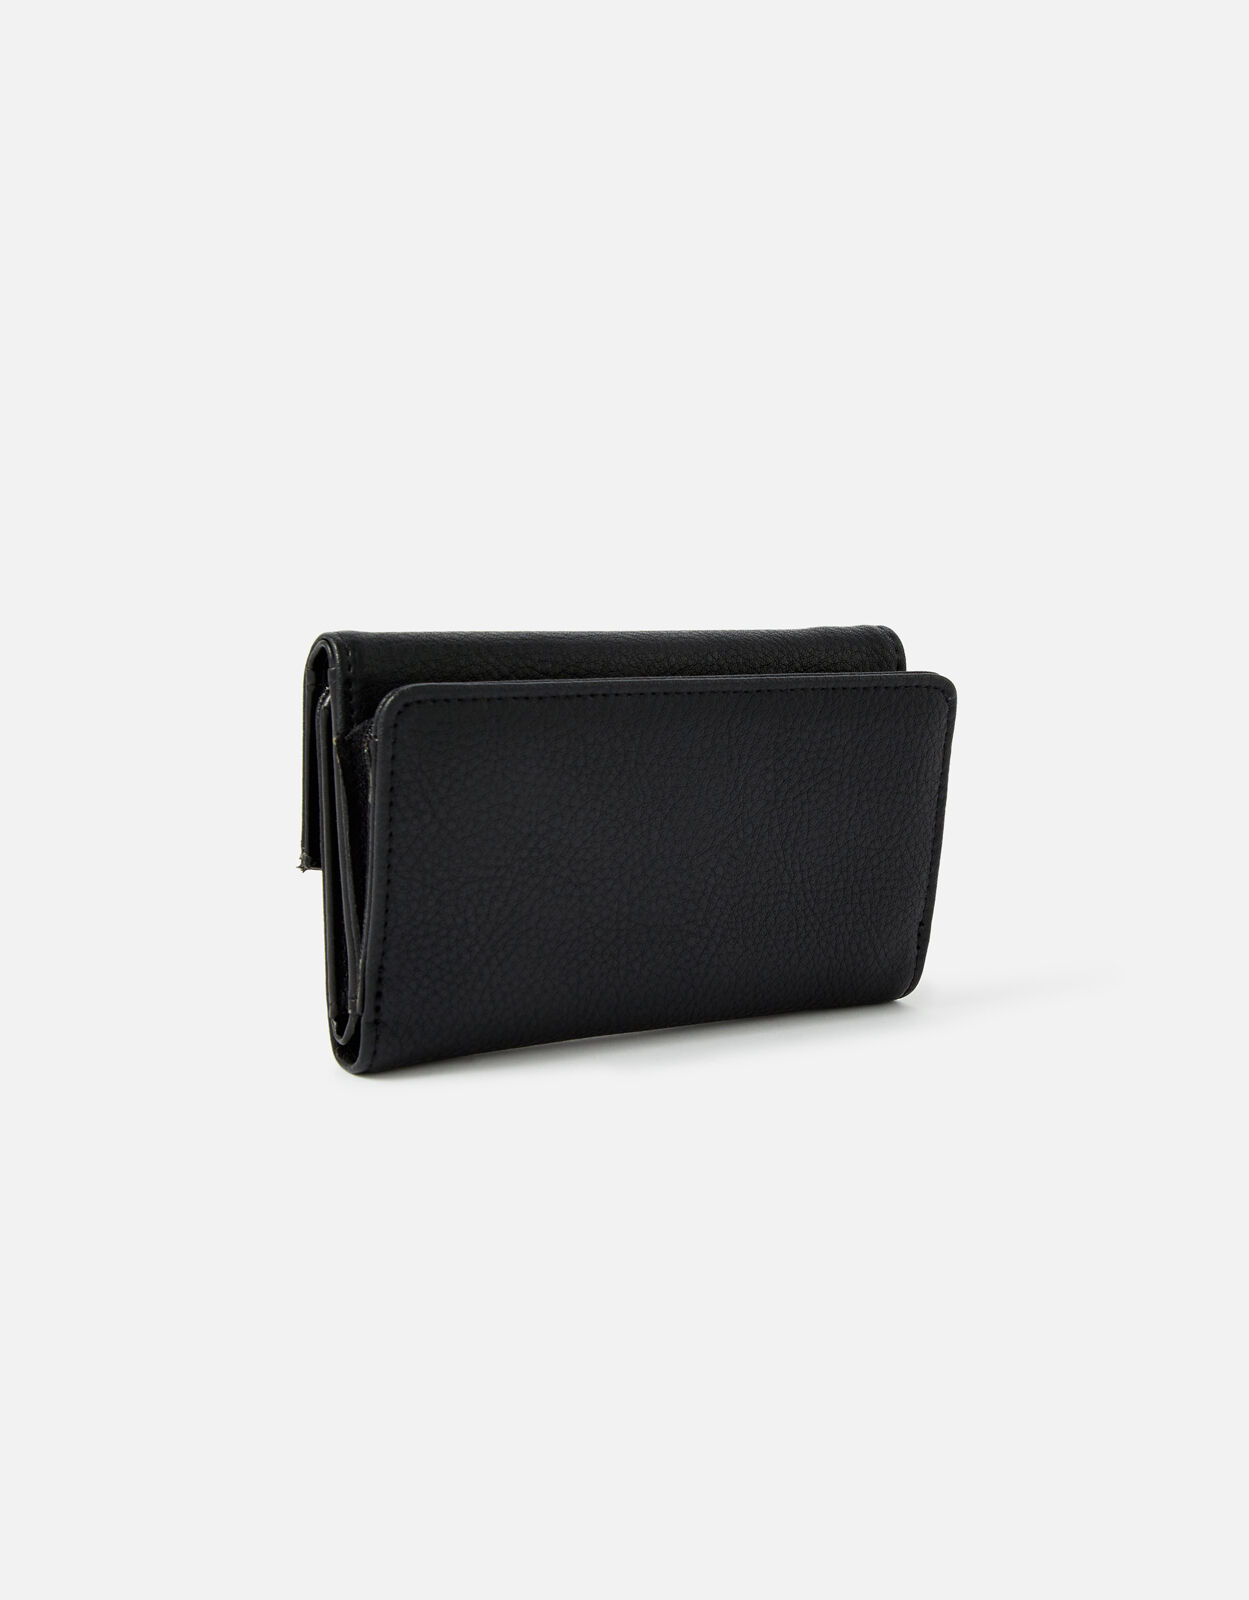 Accessorize Accessorize Purse Wallet Trifold Envelope Black Leather Zip Up Suede Gold Clasp 